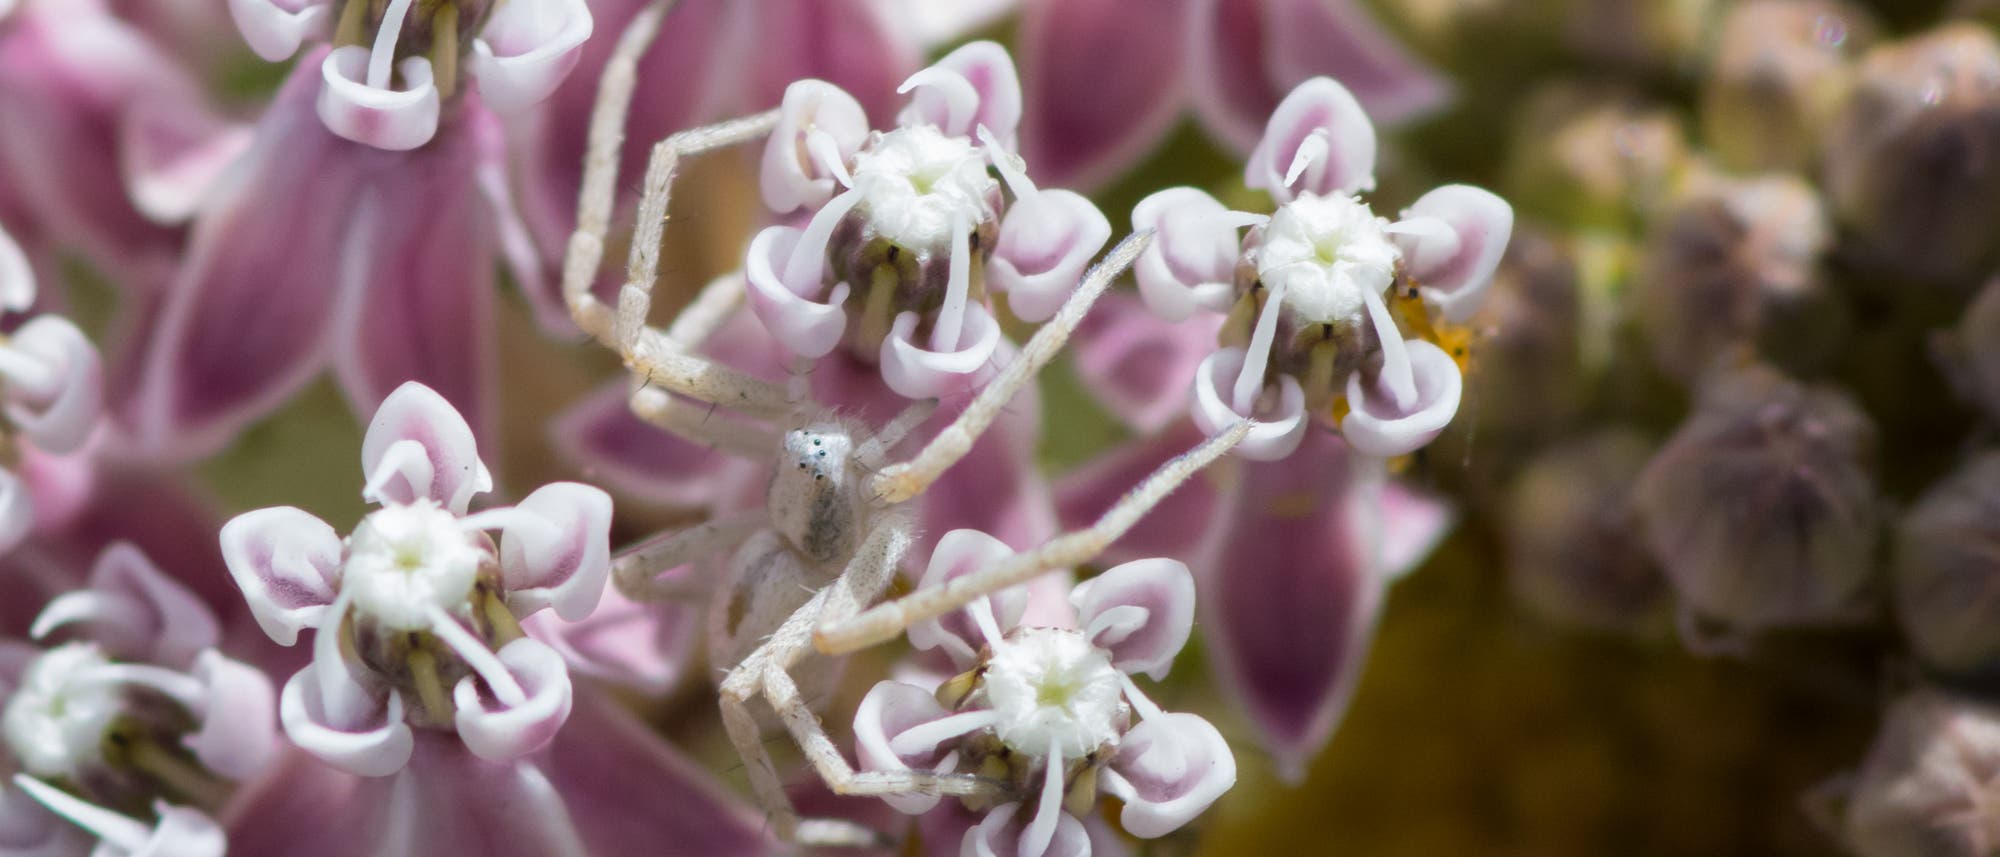 Gut versteckte Krabbenspinnen (Misumenoides formosipes) auf Blüten